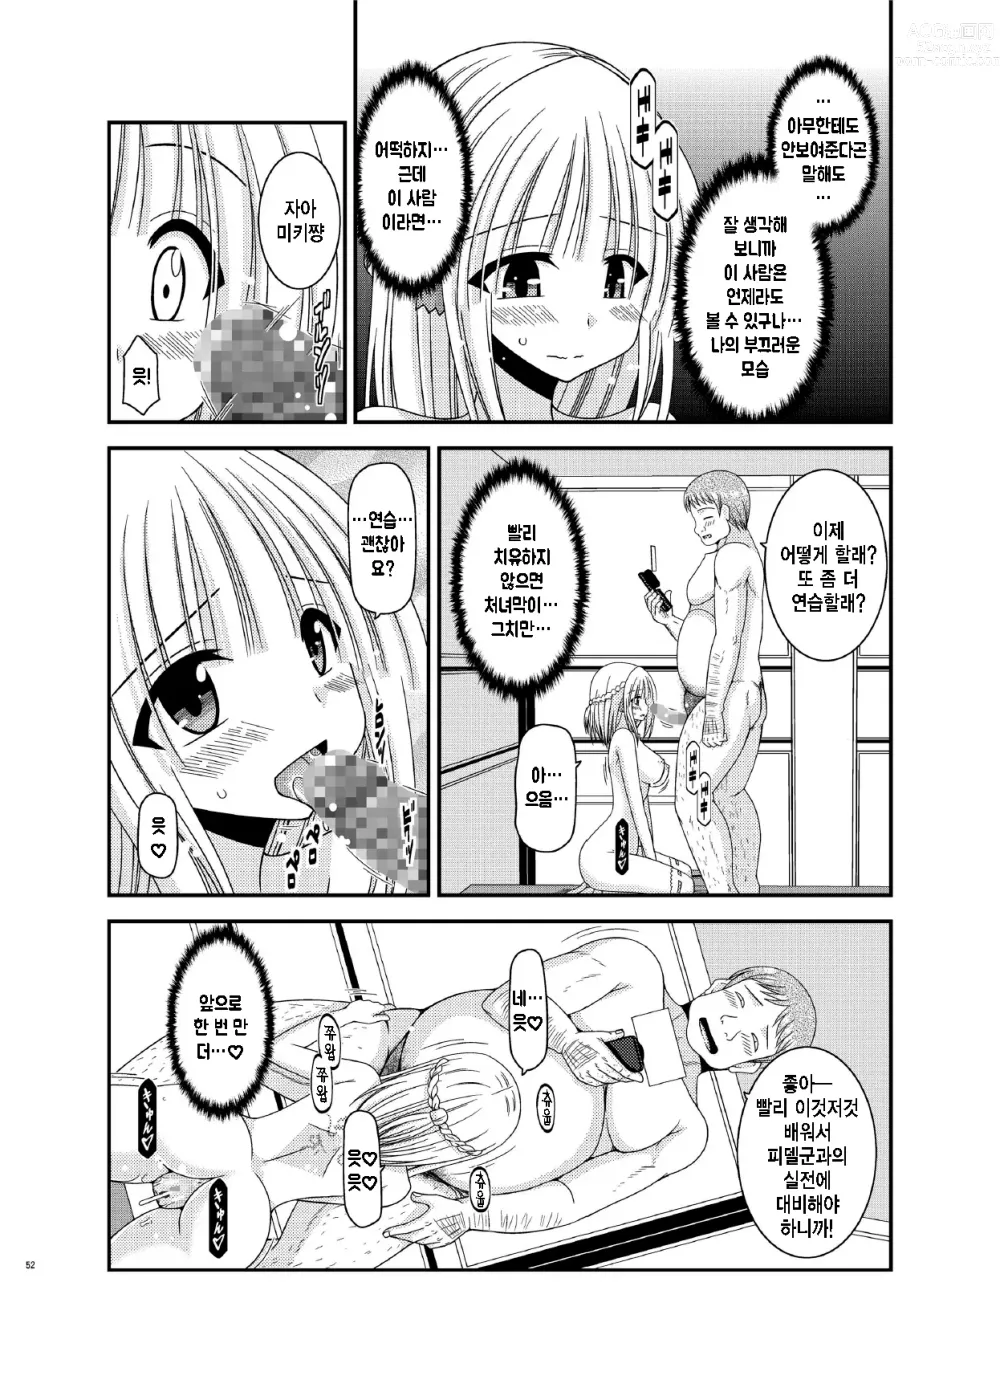 Page 51 of doujinshi Iseijin to no Sex wa No Count dakara...